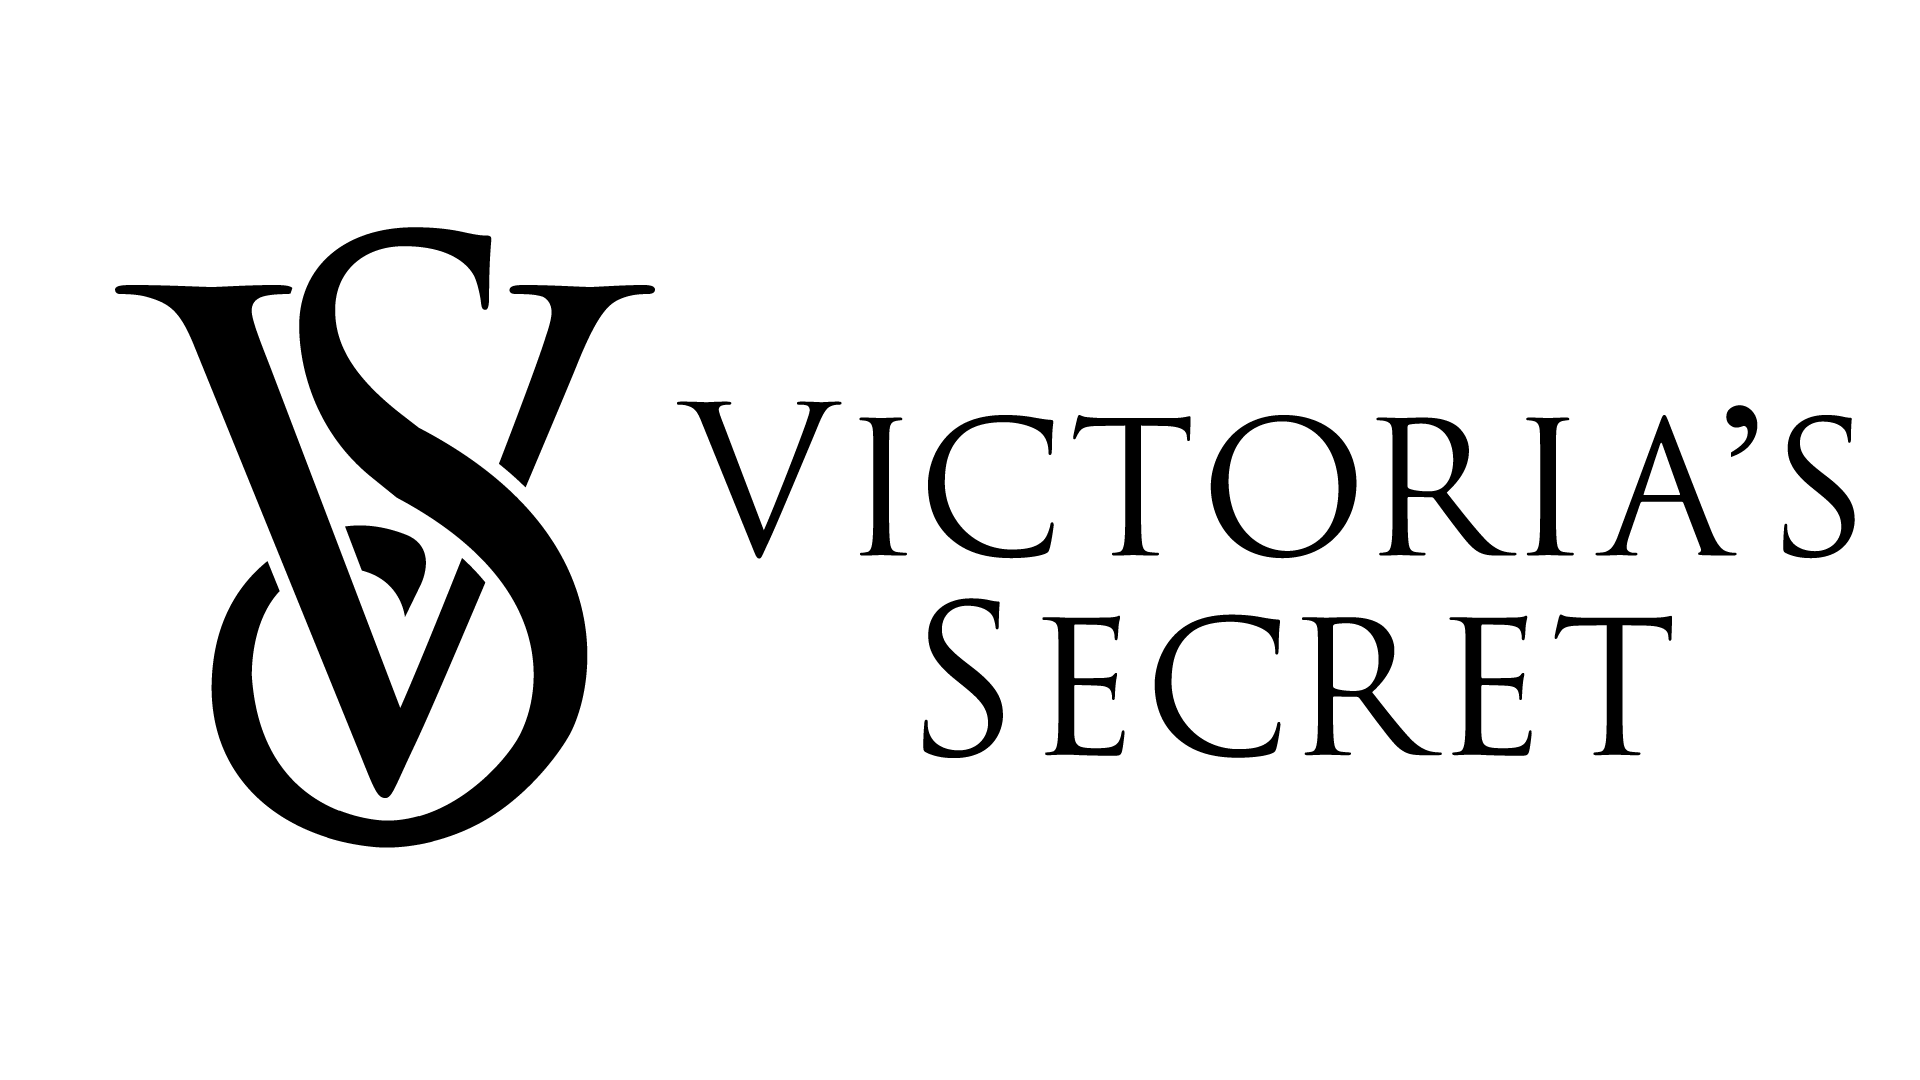 Secret Logo - Victoria Secret Logo, Victoria Secret Symbol, History and Evolution